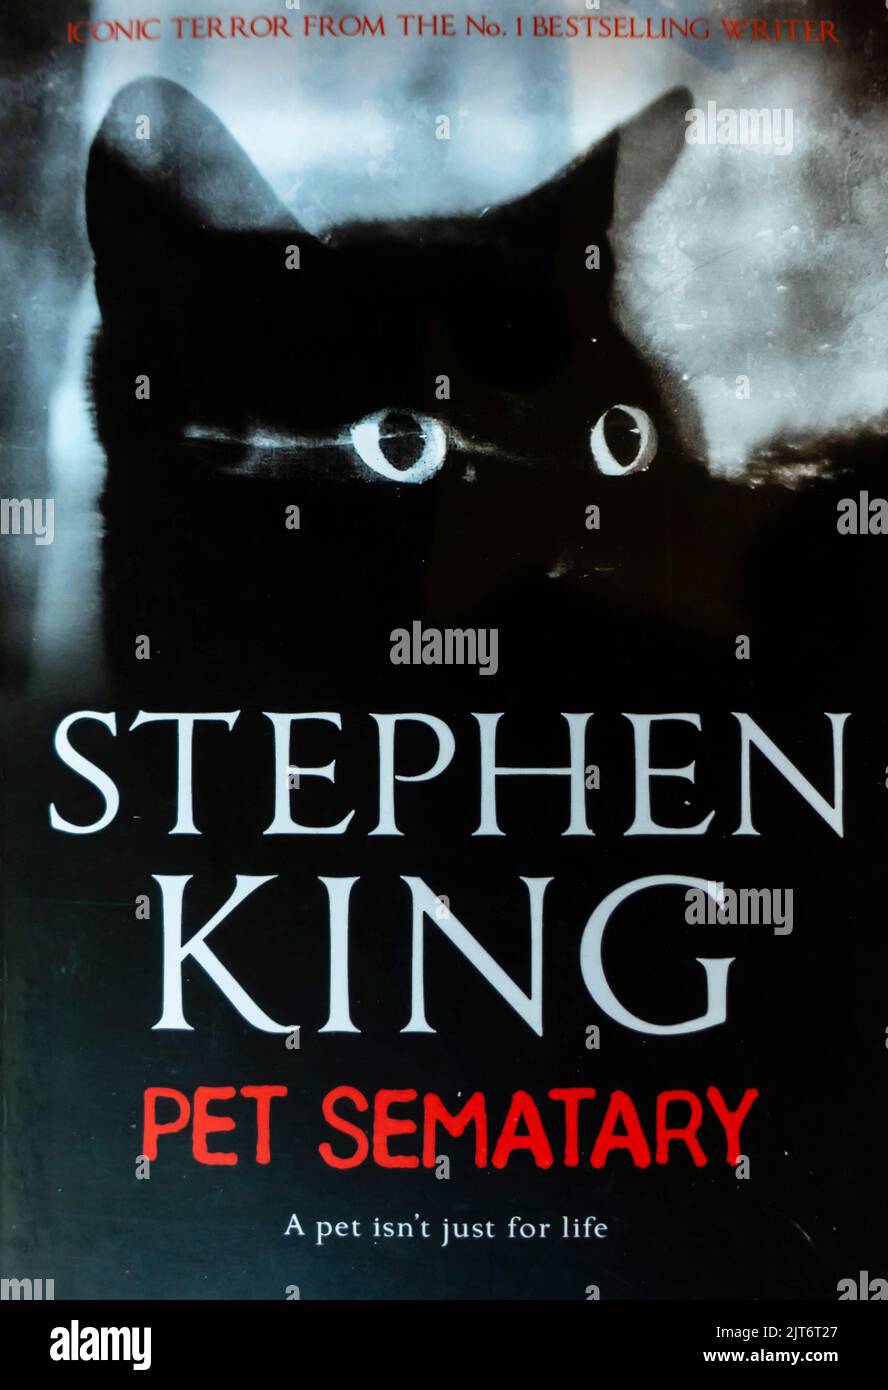 Pet sematary. Novel by Stephen King. 1983 Stock Photo